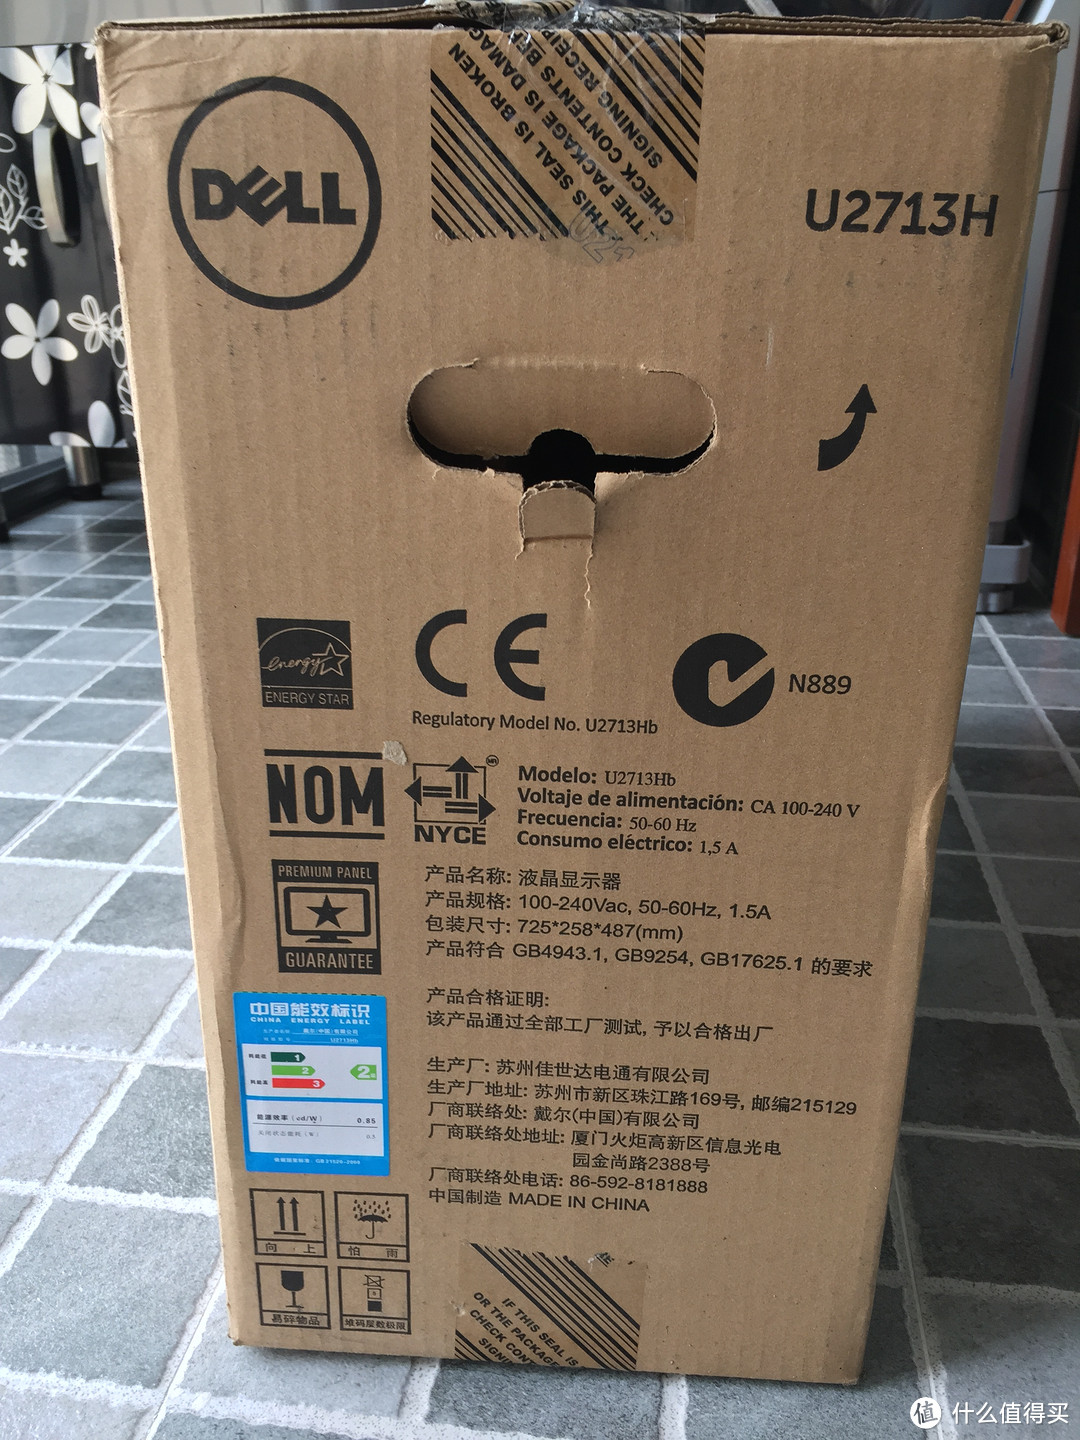 Dell 戴尔 27寸 IPS广色域显示器 U2713H